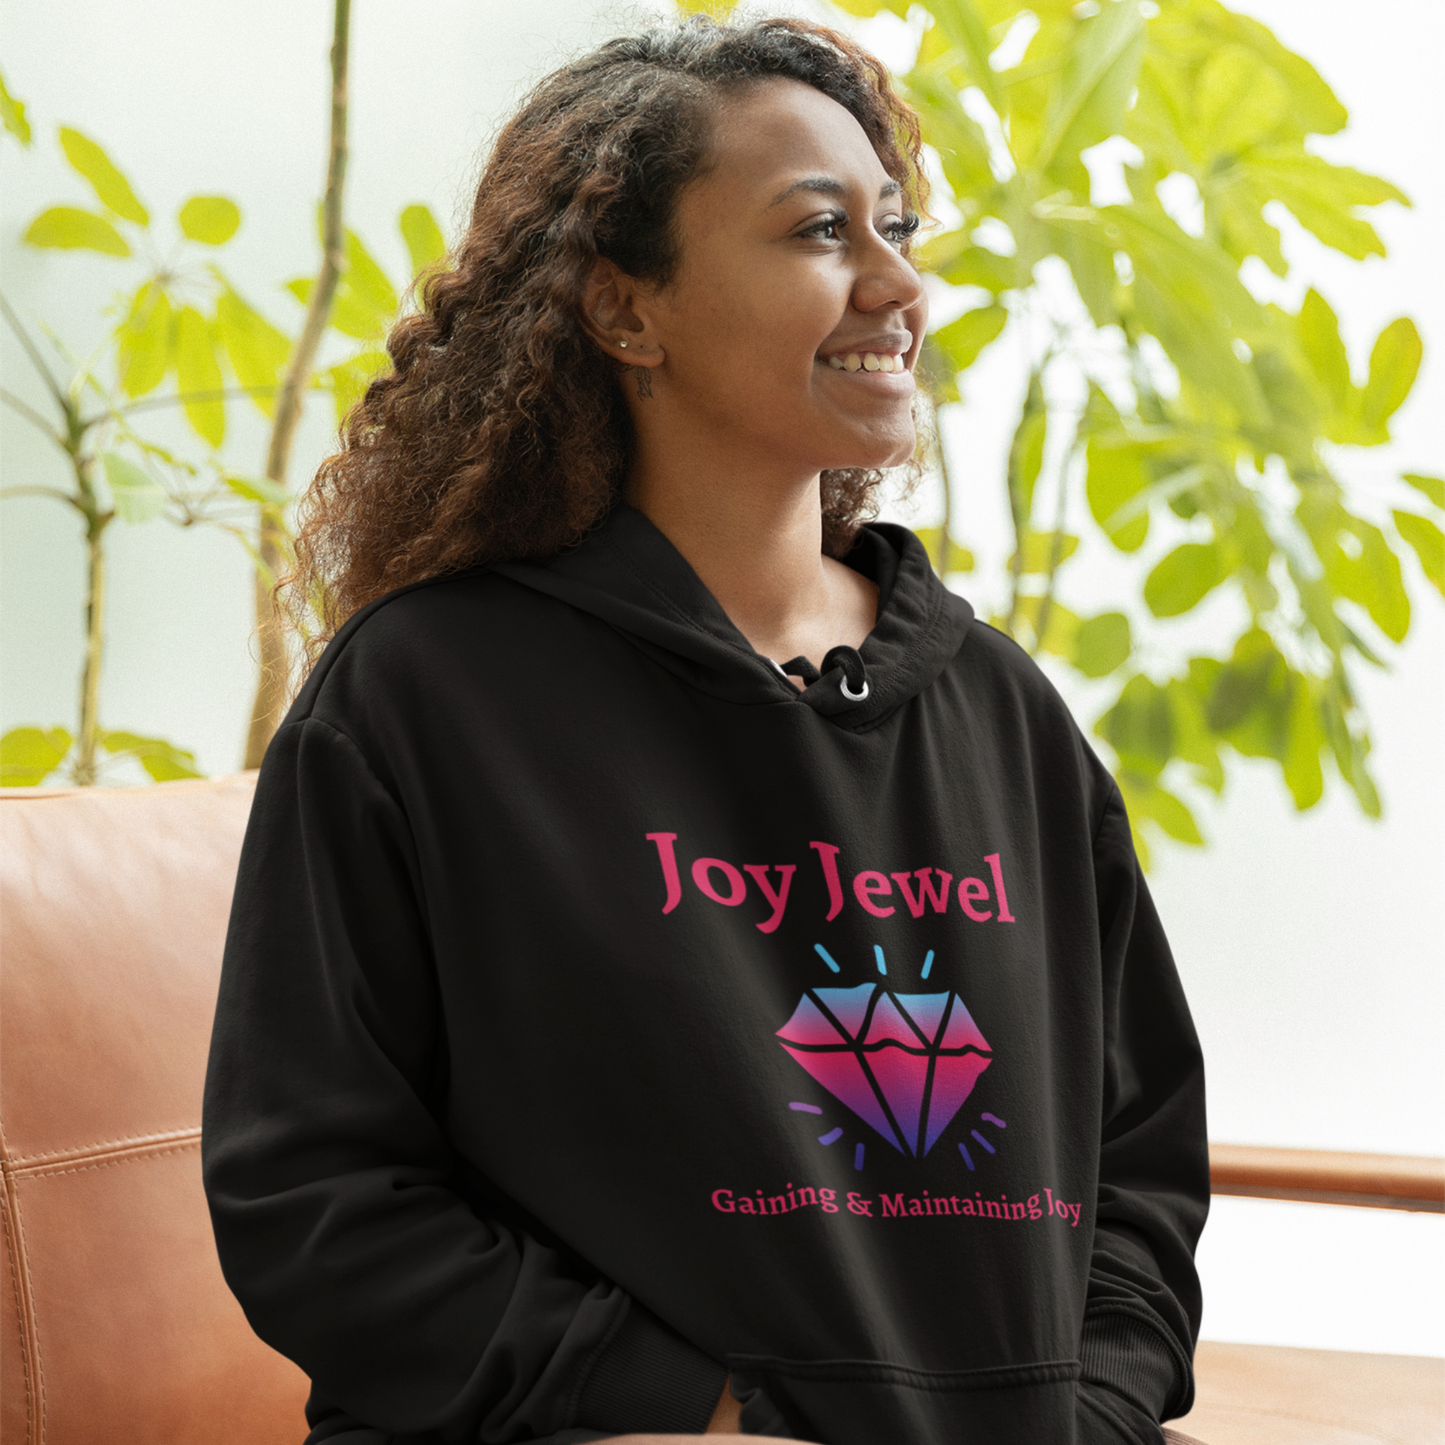 Joy Jewel: Gaining & Maintaining Joy (Graphic Fuchsia Text with Diamond) Unisex Heavy Blend Hoodie - Style: Gildan 18500